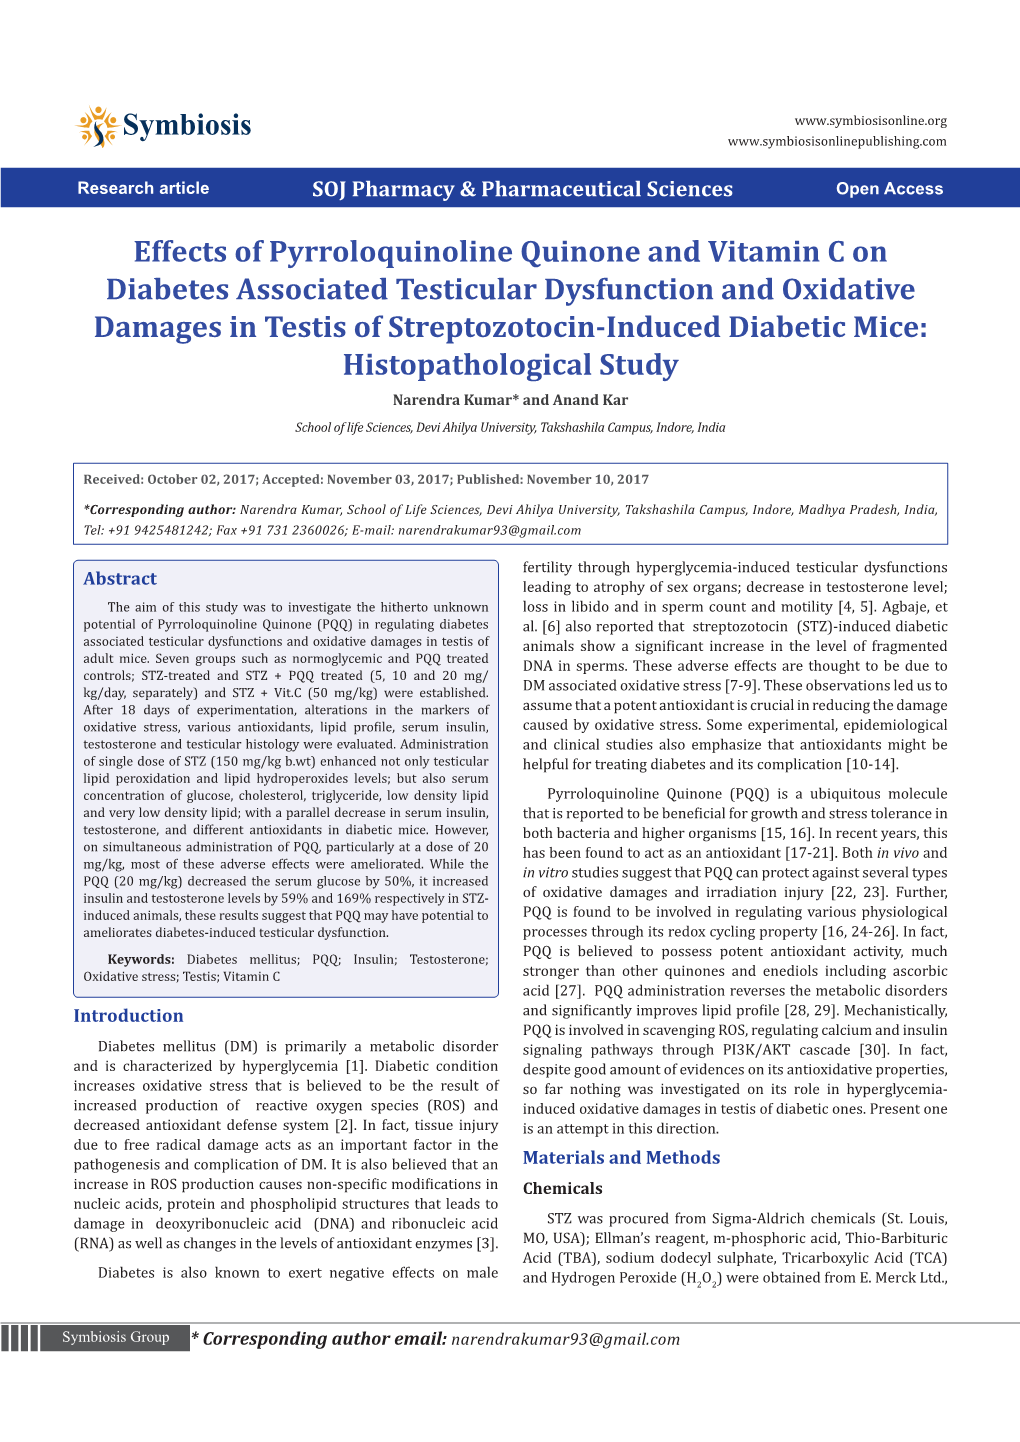 Effects of Pyrroloquinoline Quinone and Vitamin C on Diabetes